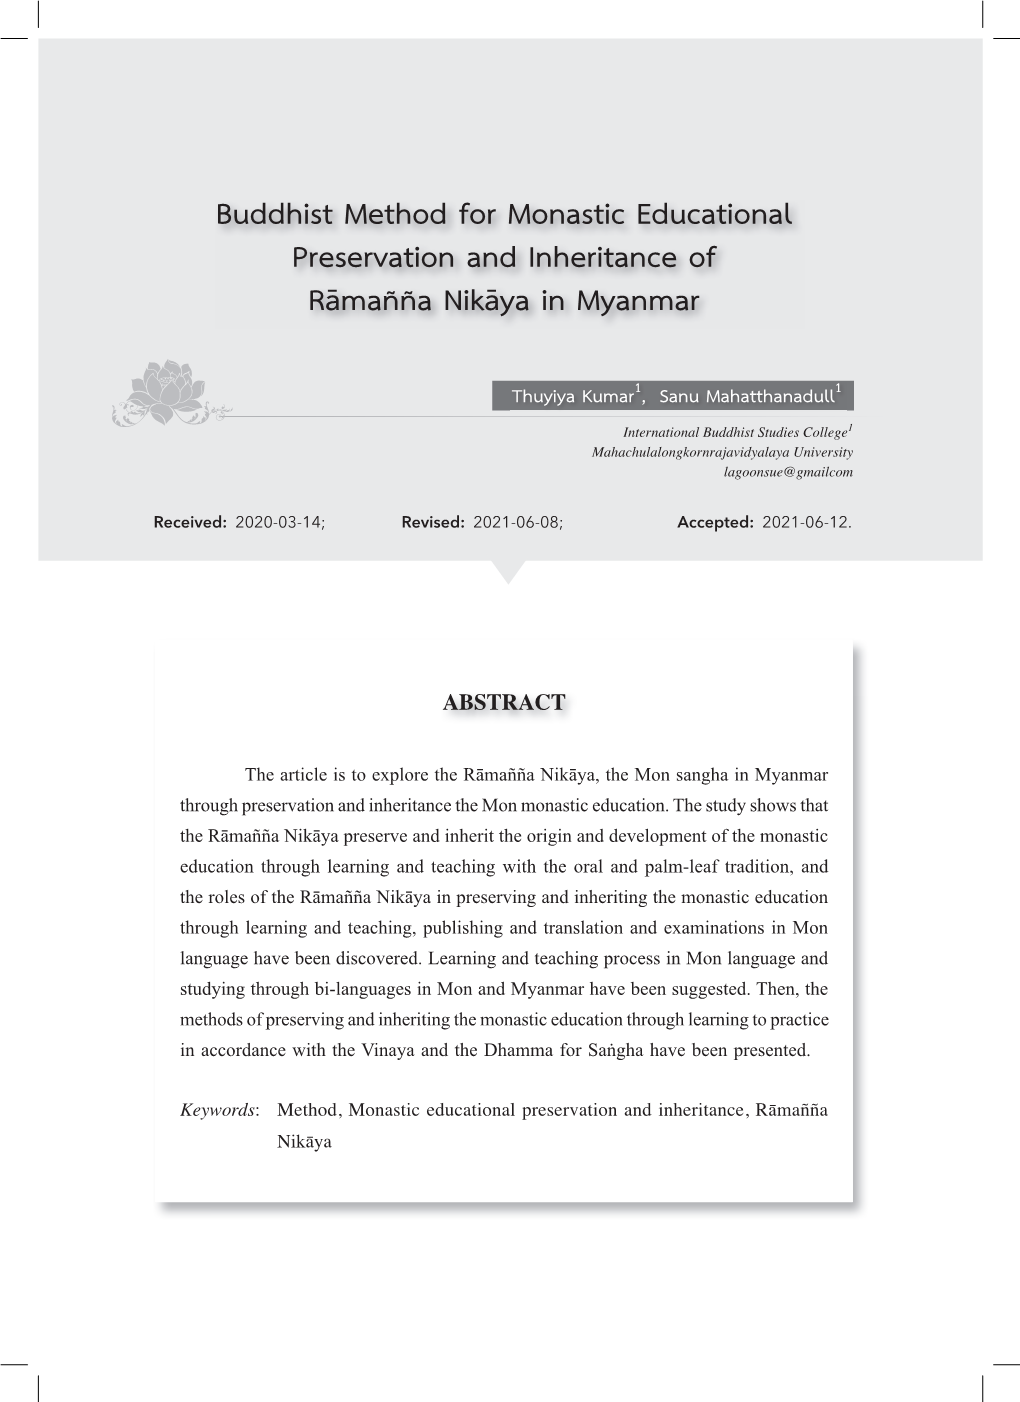 Buddhist Method for Monastic Educational Preservation and Inheritance of Rāmañña Nikāya in Myanmar